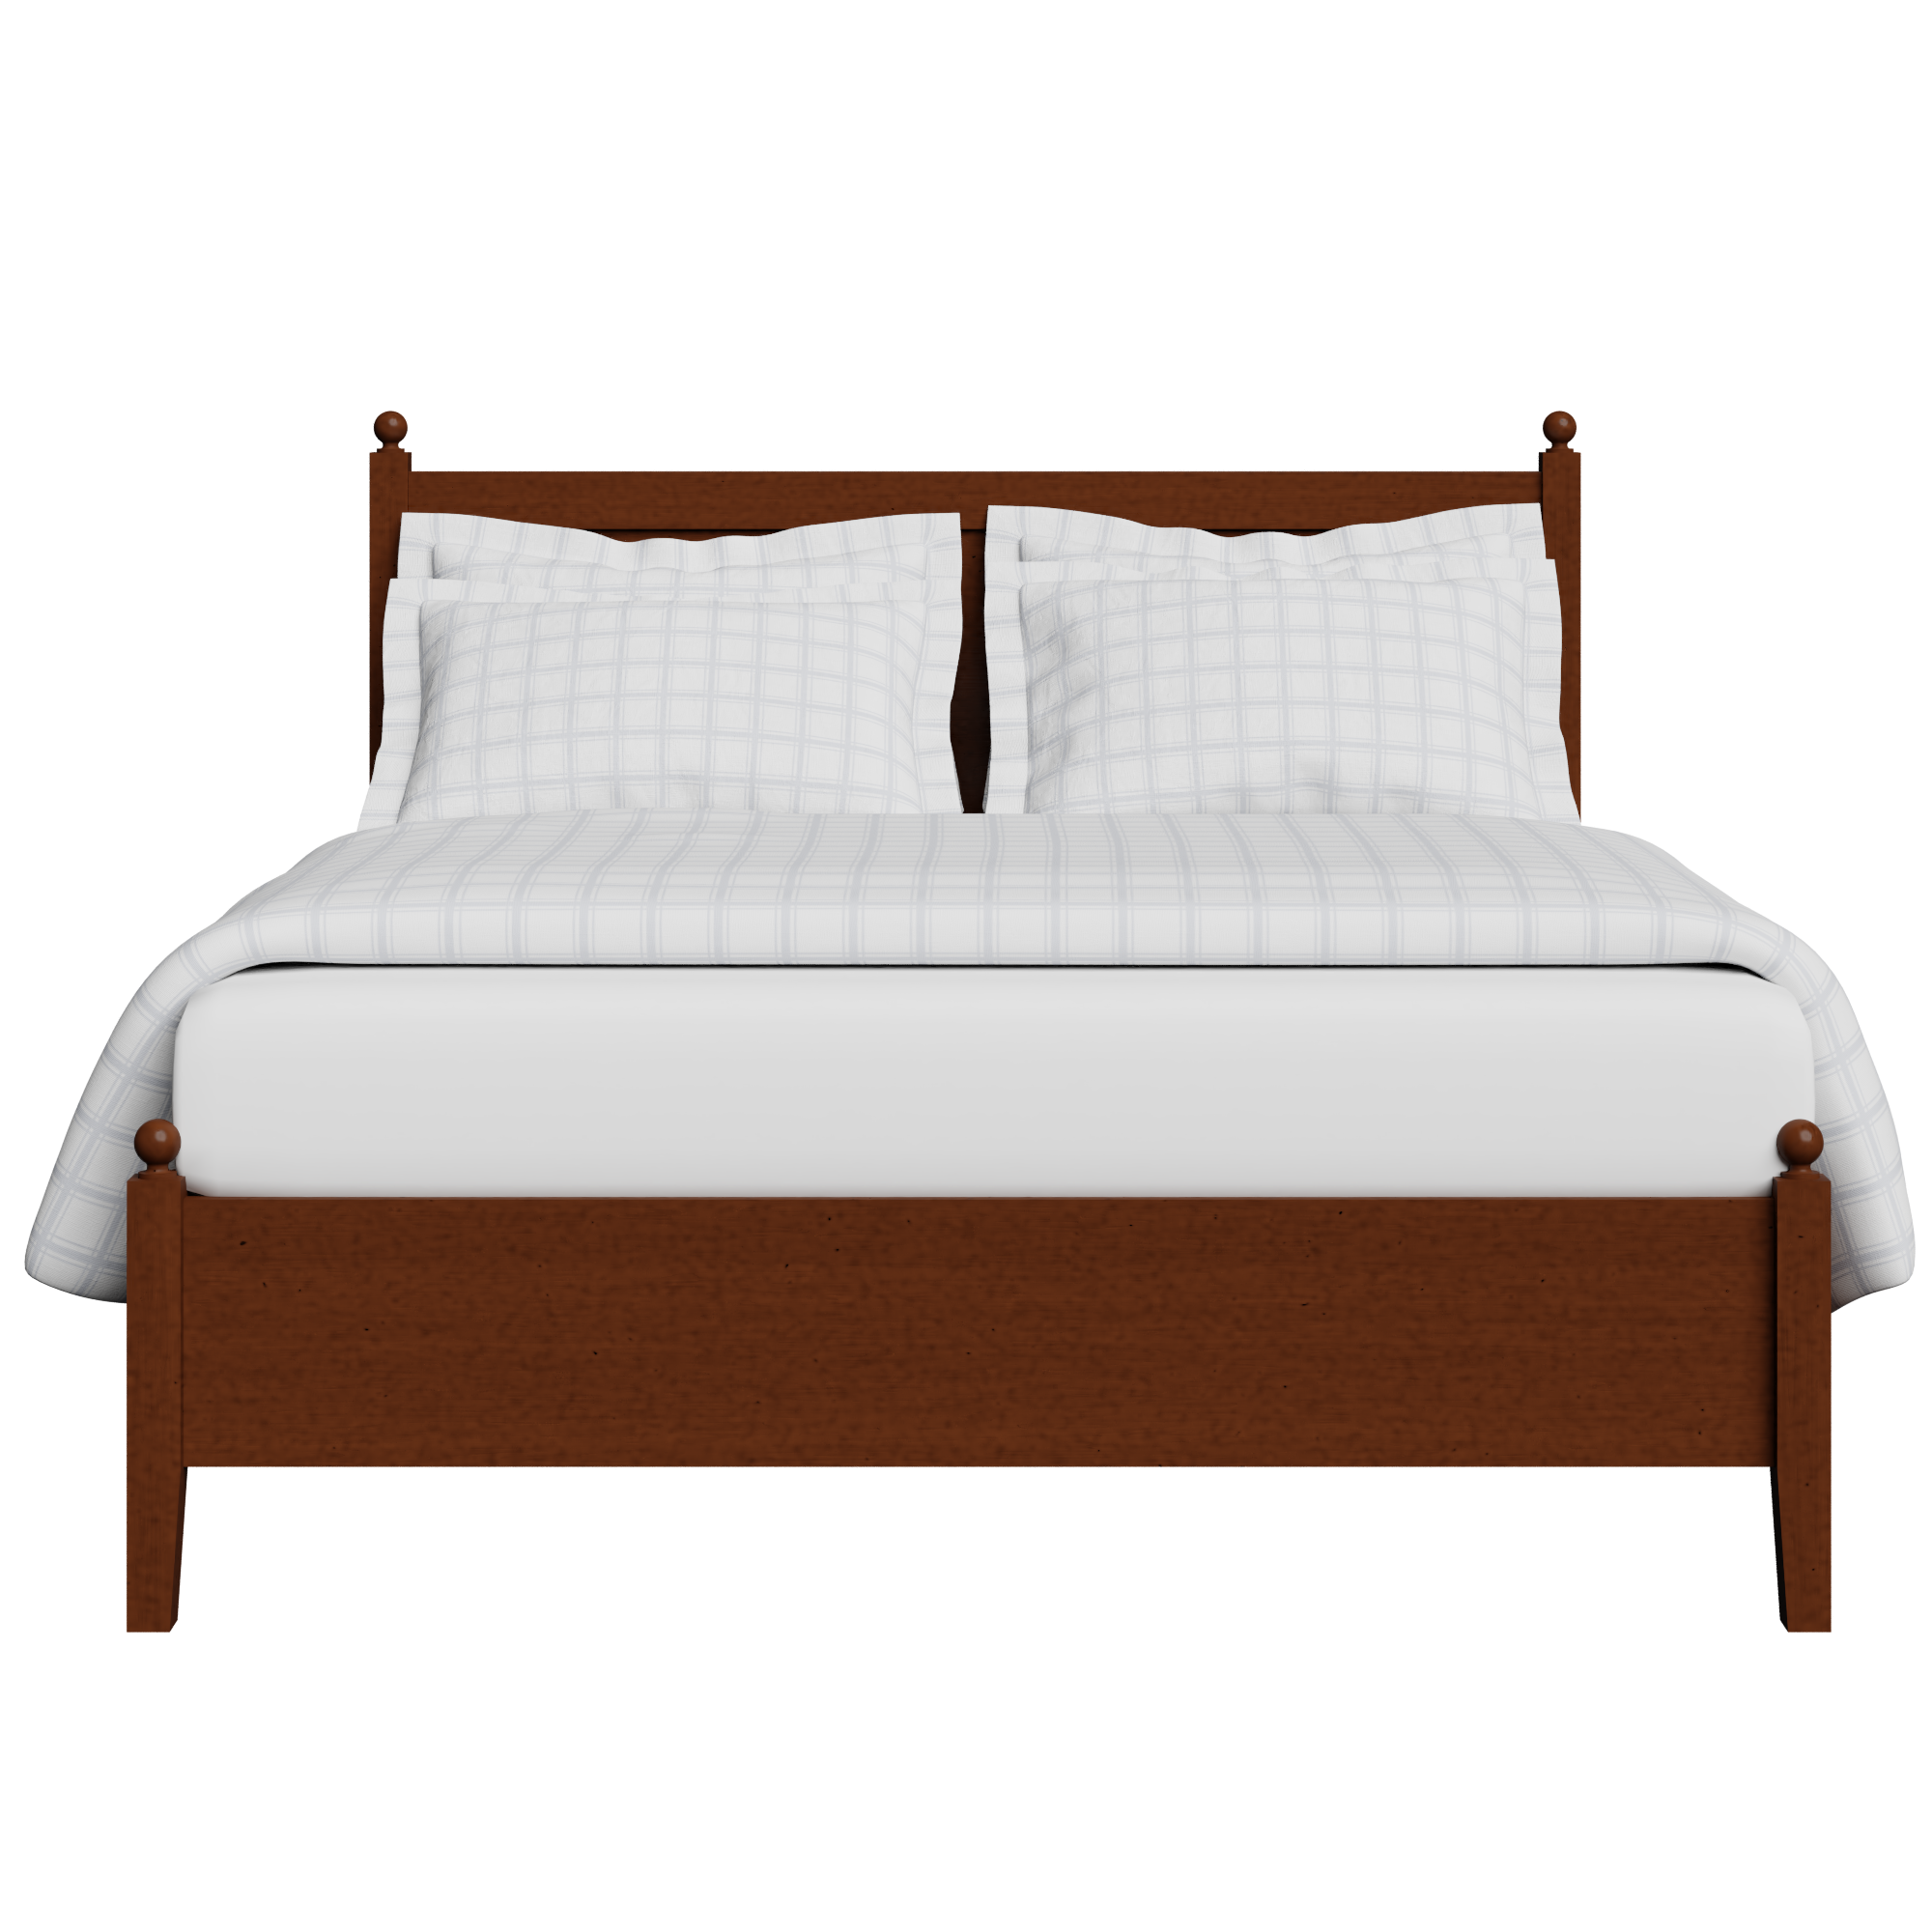 Marbella Low Footend wood bed in dark cherry